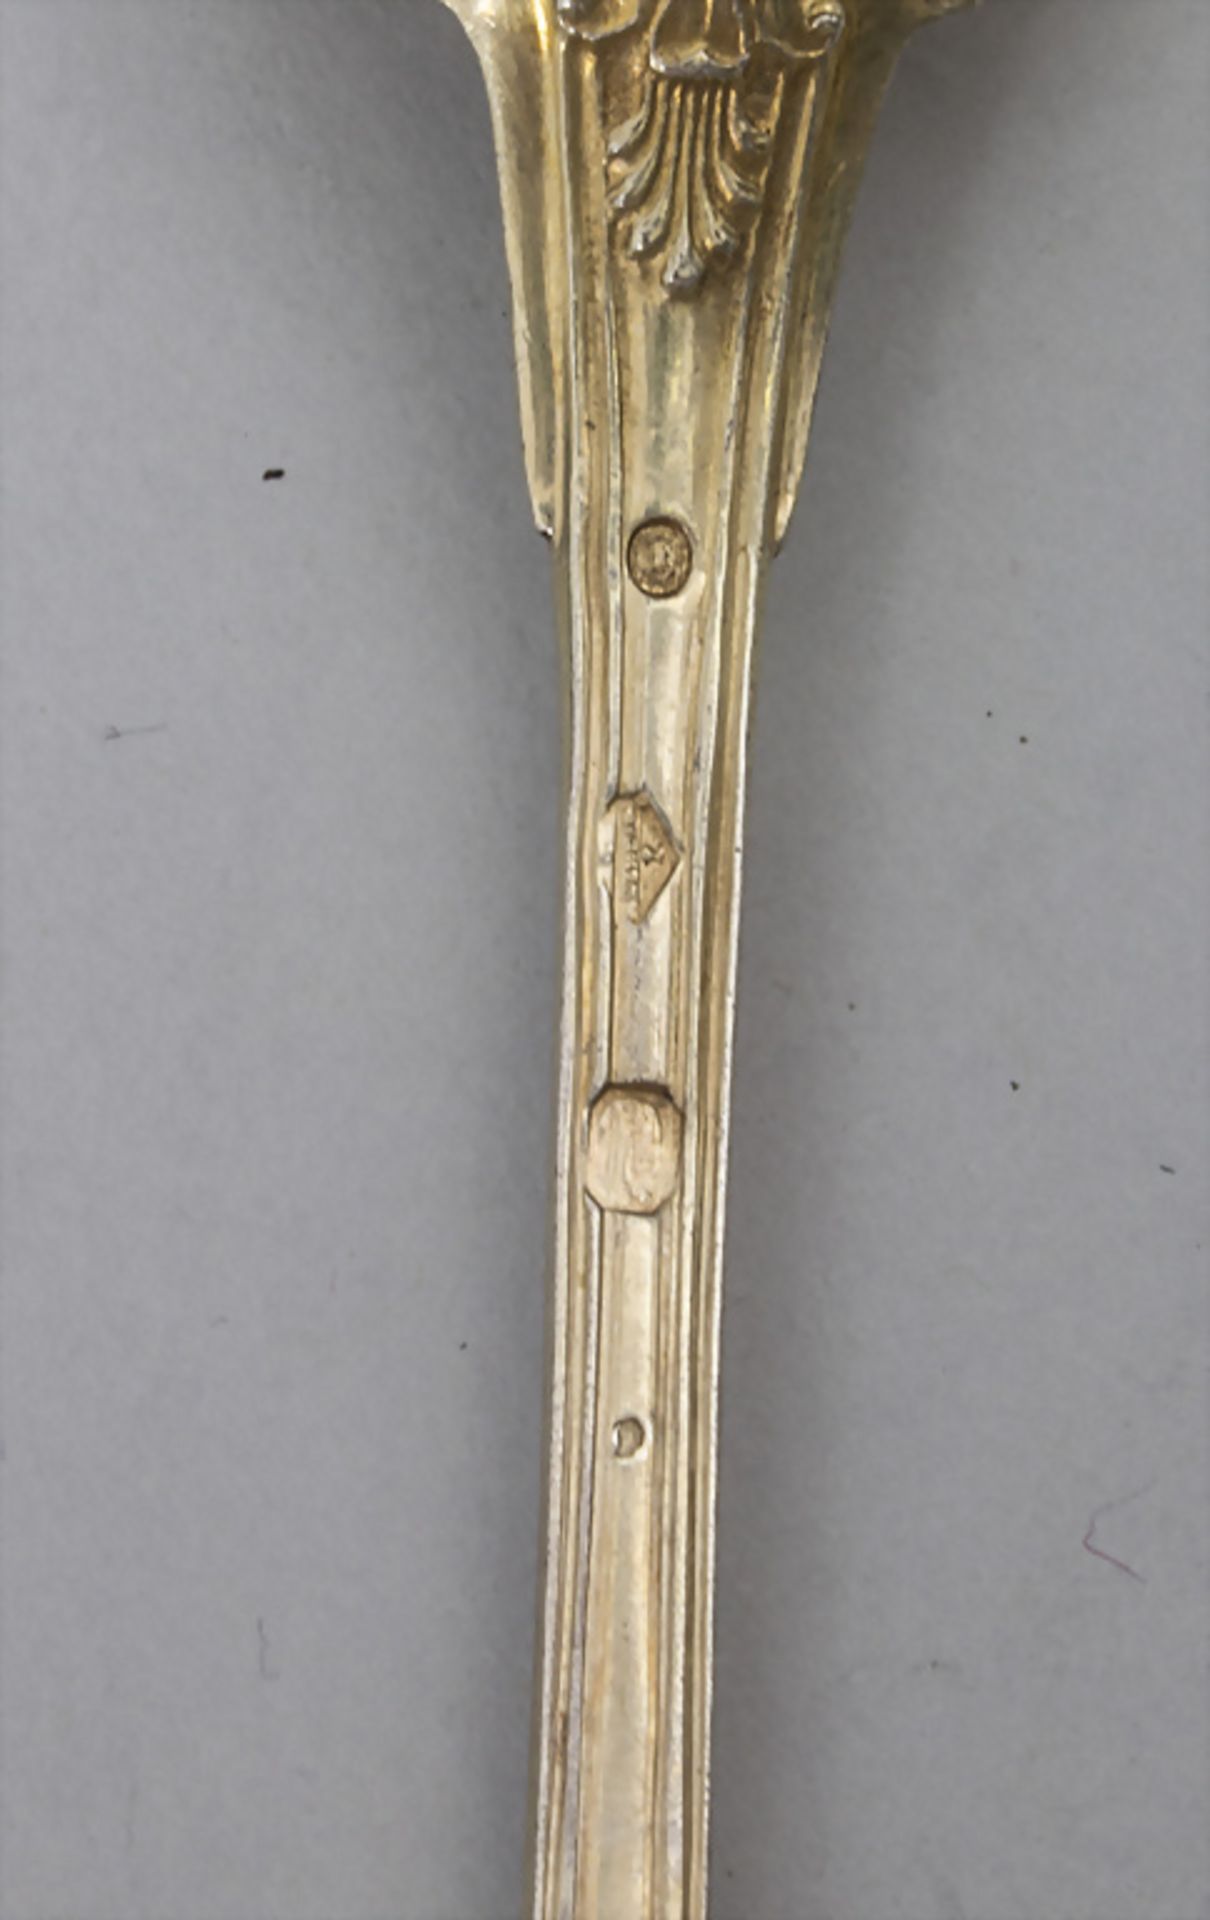 36 tlg. Silberbesteck / A 36-piece set of silver cutlery, Charles Salomon Mahler, Paris, 1824-1833 - Bild 14 aus 15